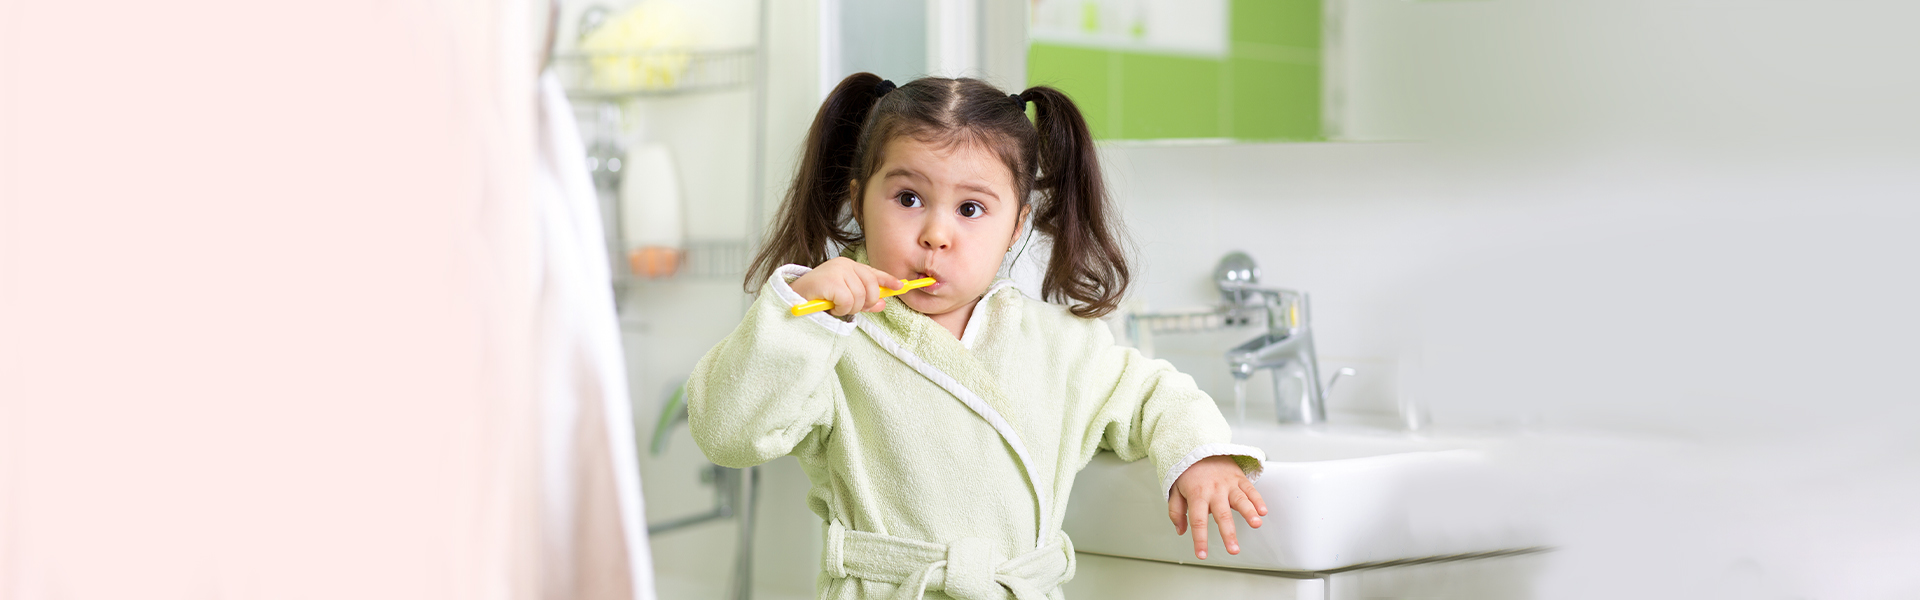 Dental Sealants Protect Your Kid’s Teeth